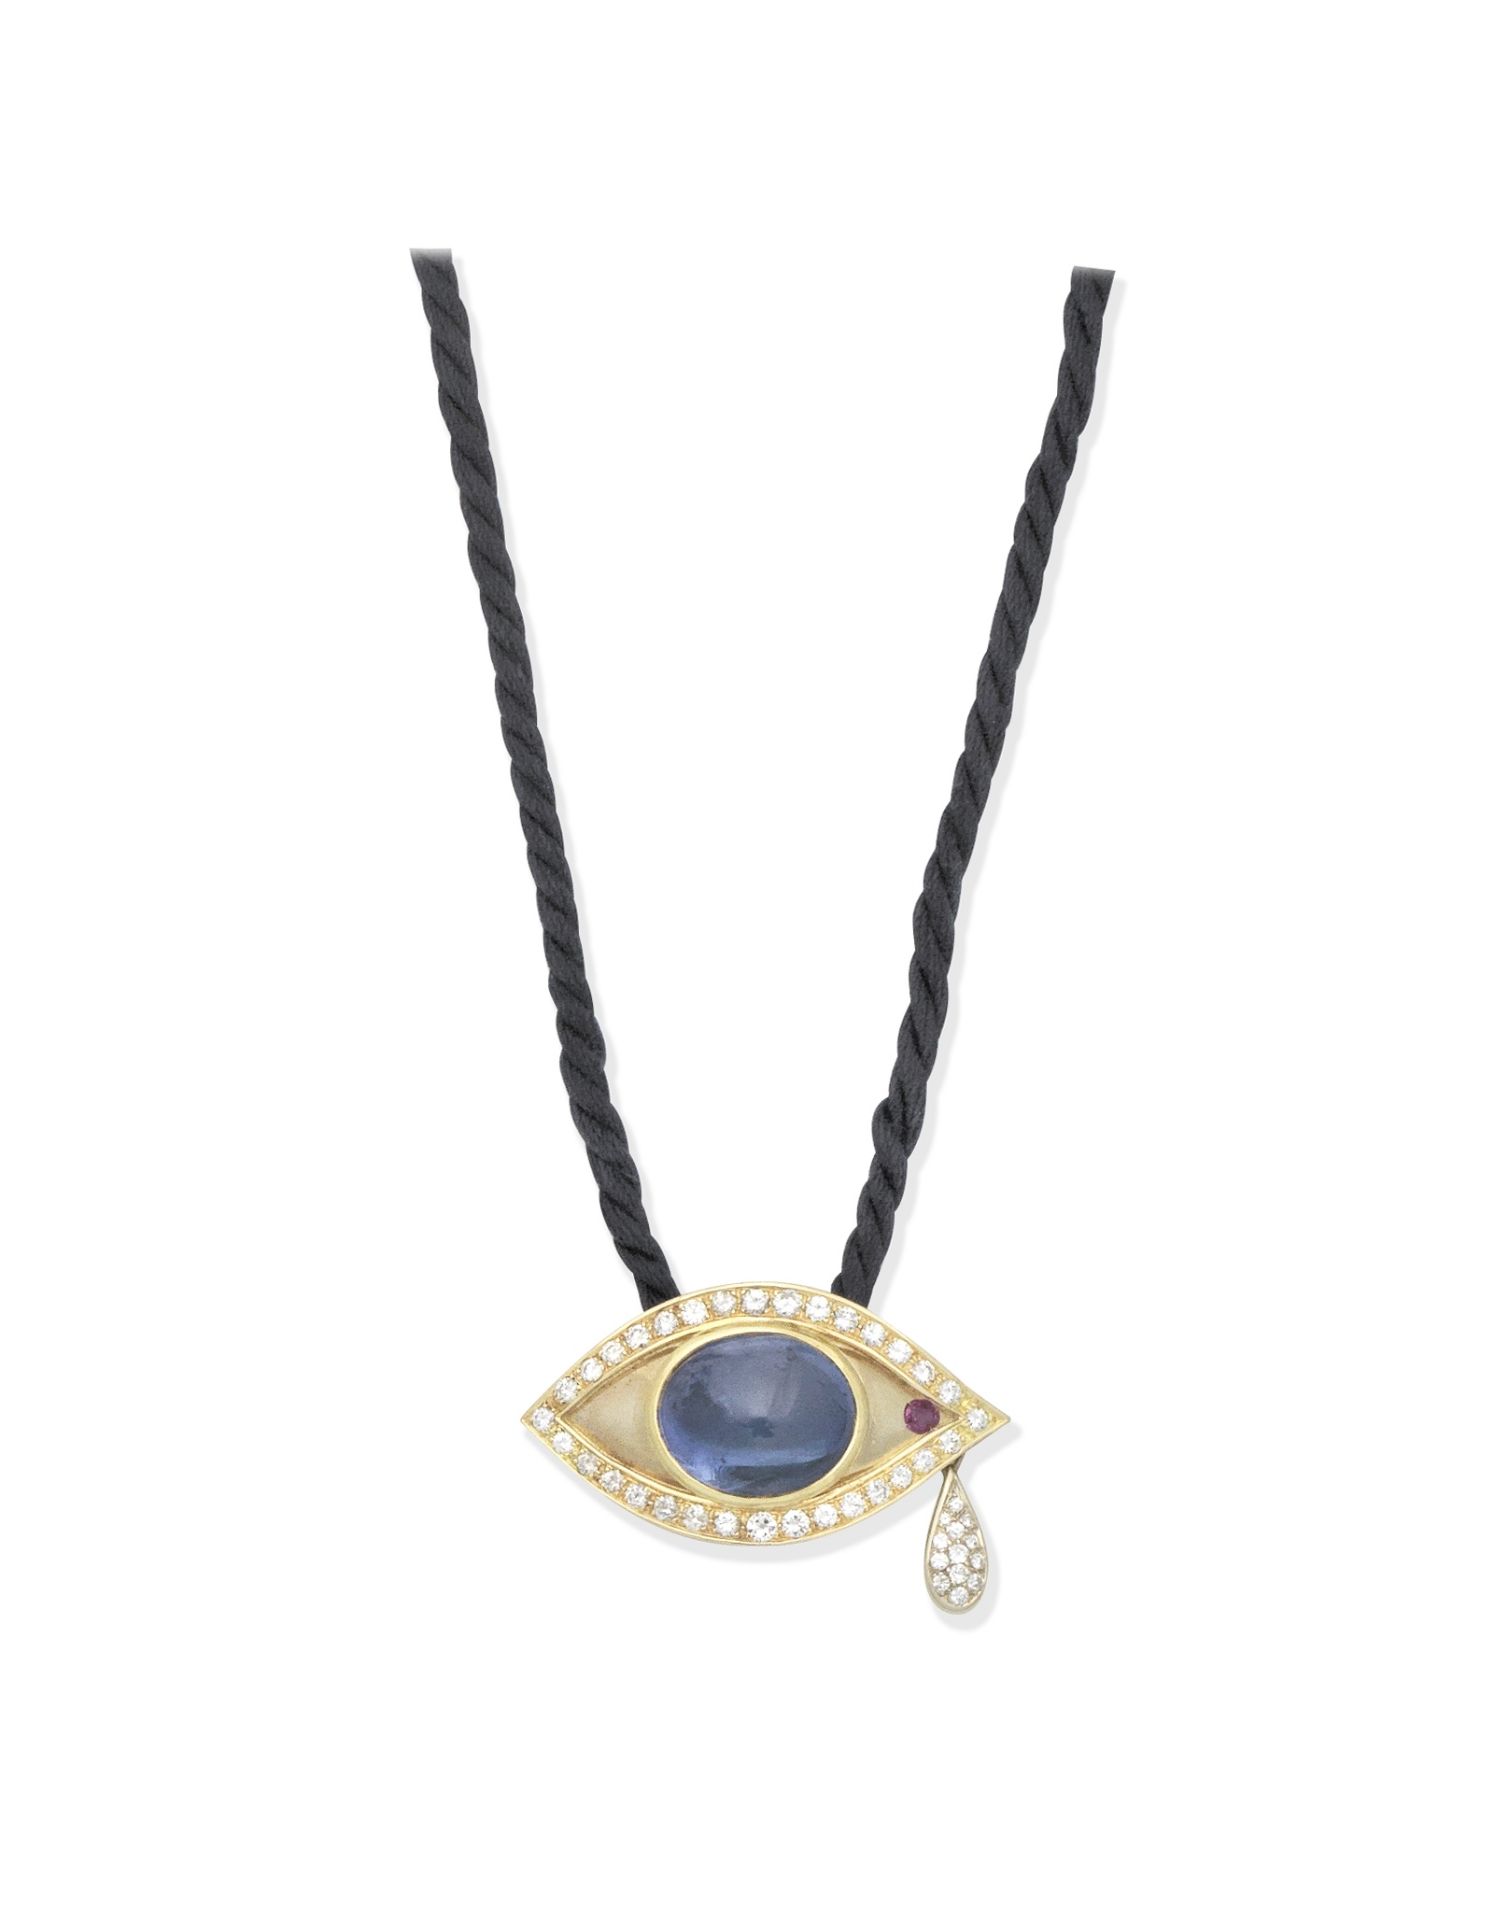 Sapphire, ruby and diamond pendant